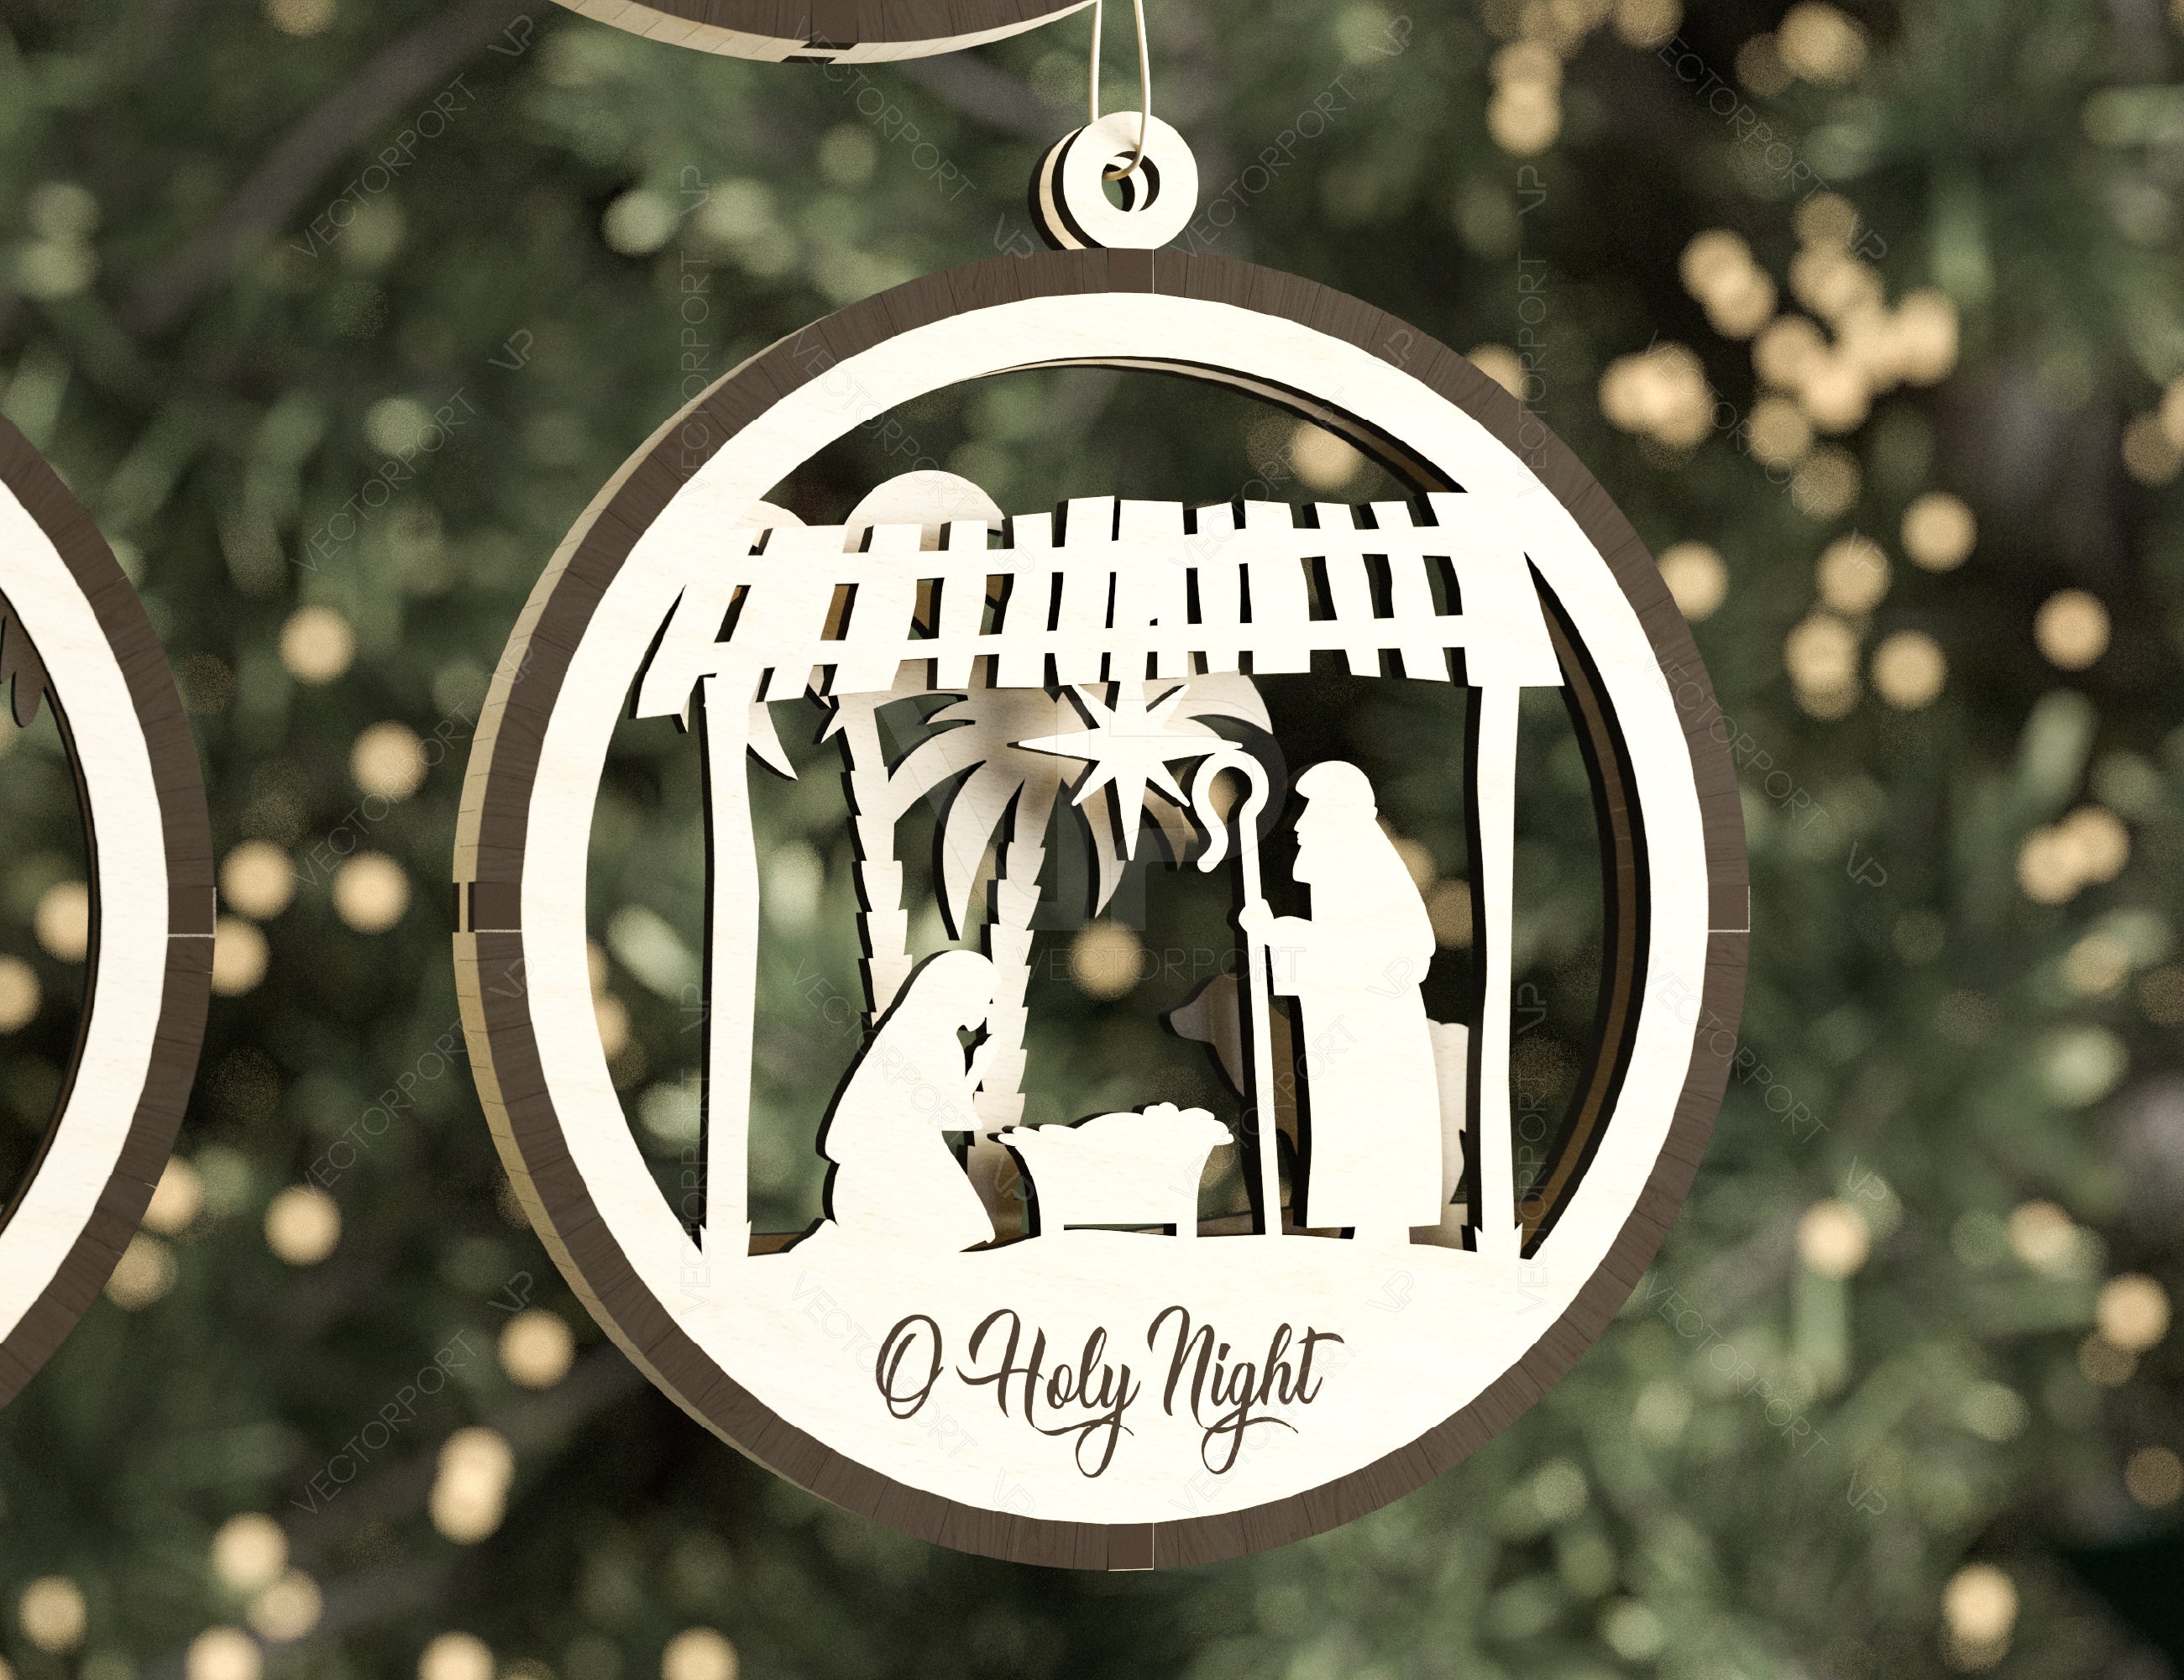 Nativity Scene Tree Balls Craft Round Hanging Bauble Christmas Eve with baby Jesus Digital Download SVG |#U319|